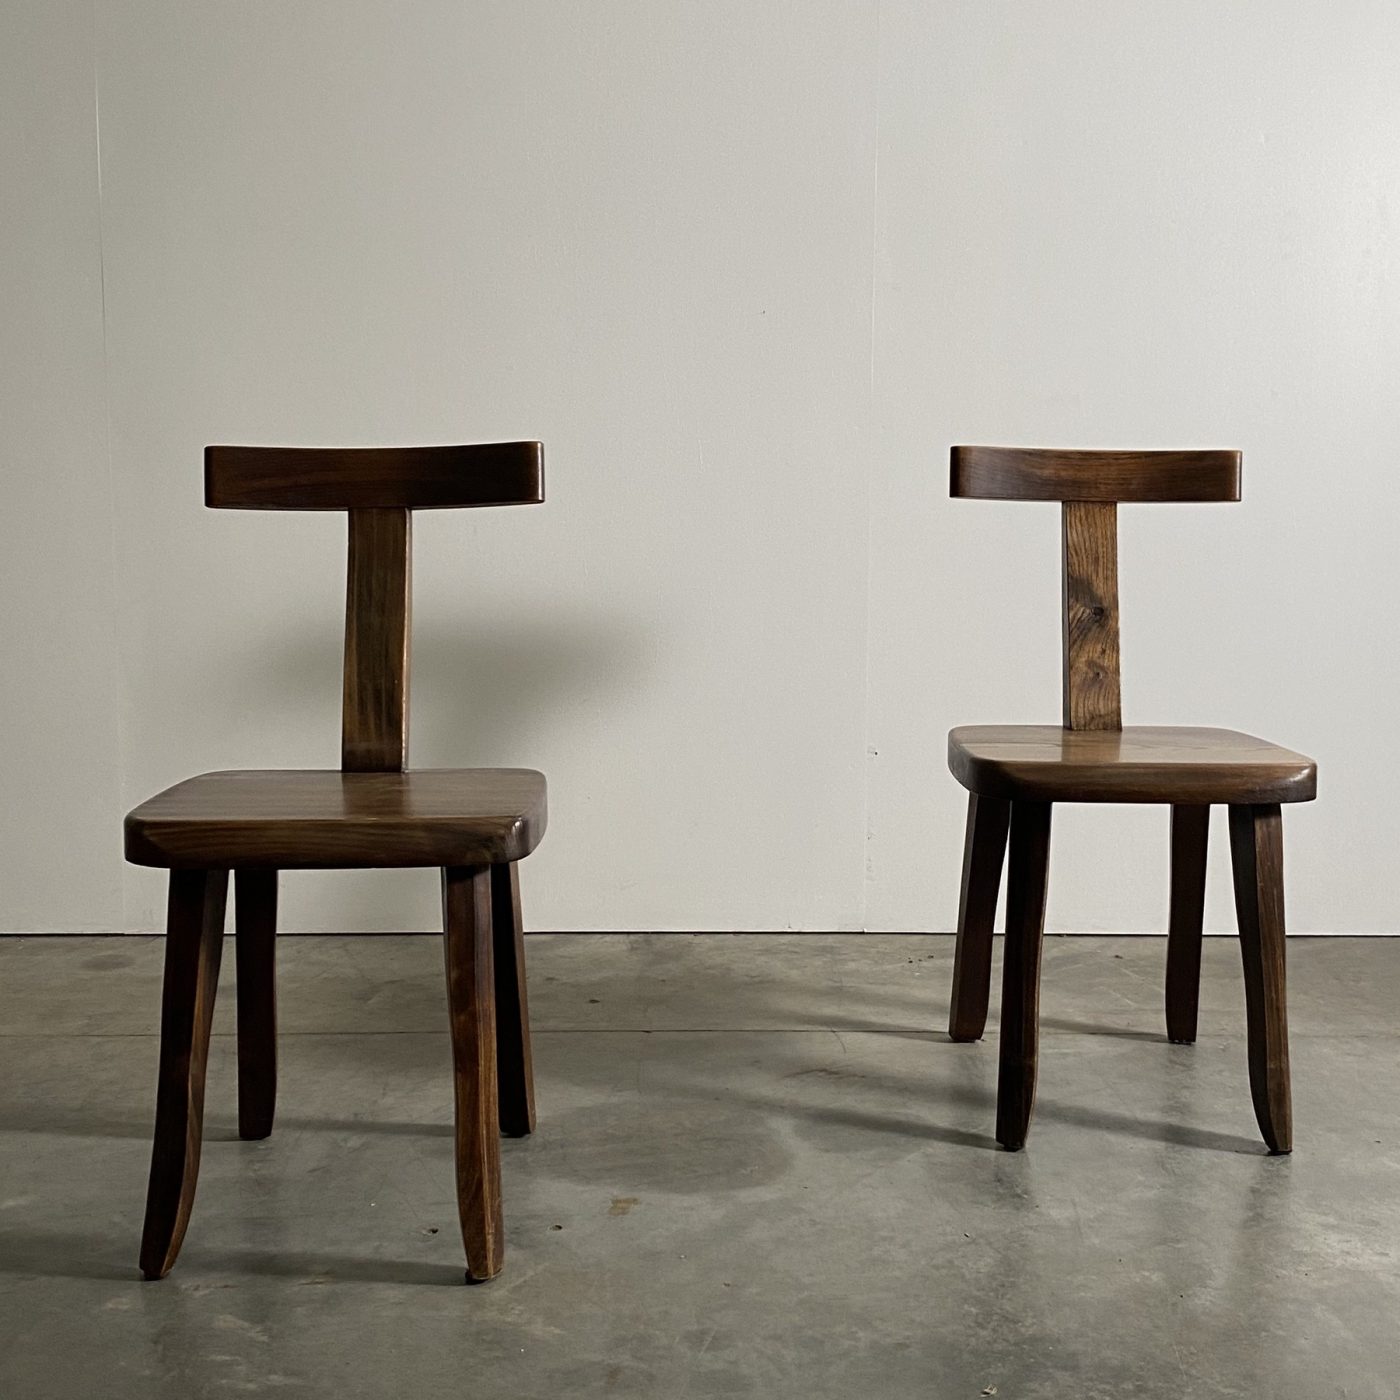 objet-vagabond-hanninen-chairs0000